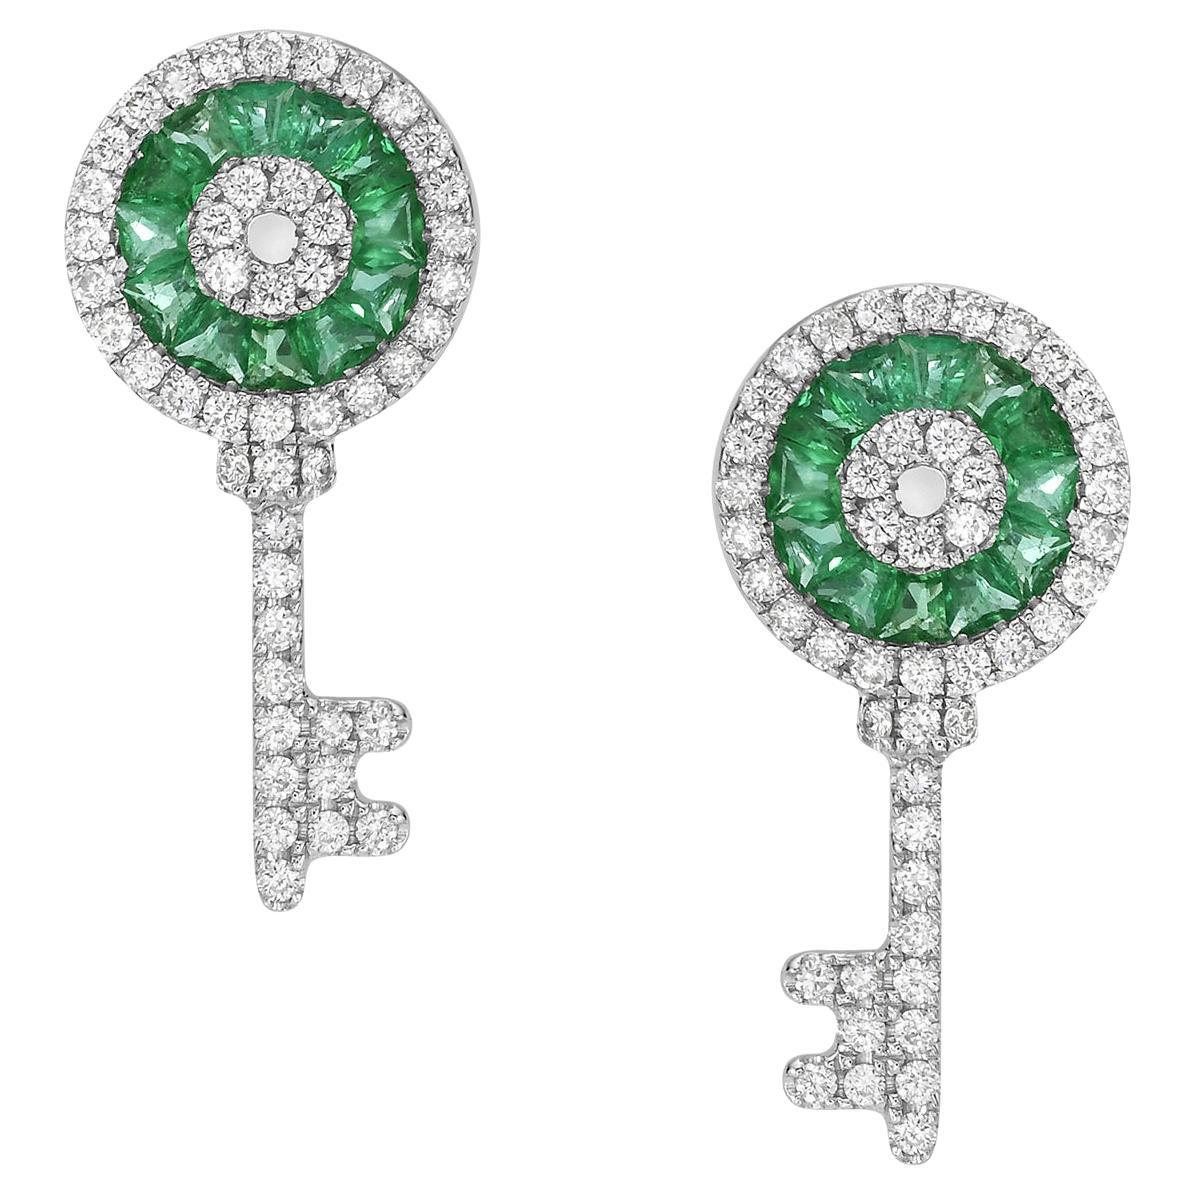 1.01 Ct Emerald & Diamond Earrings Designed In Key Shape Made In 18k White Gold For Sale